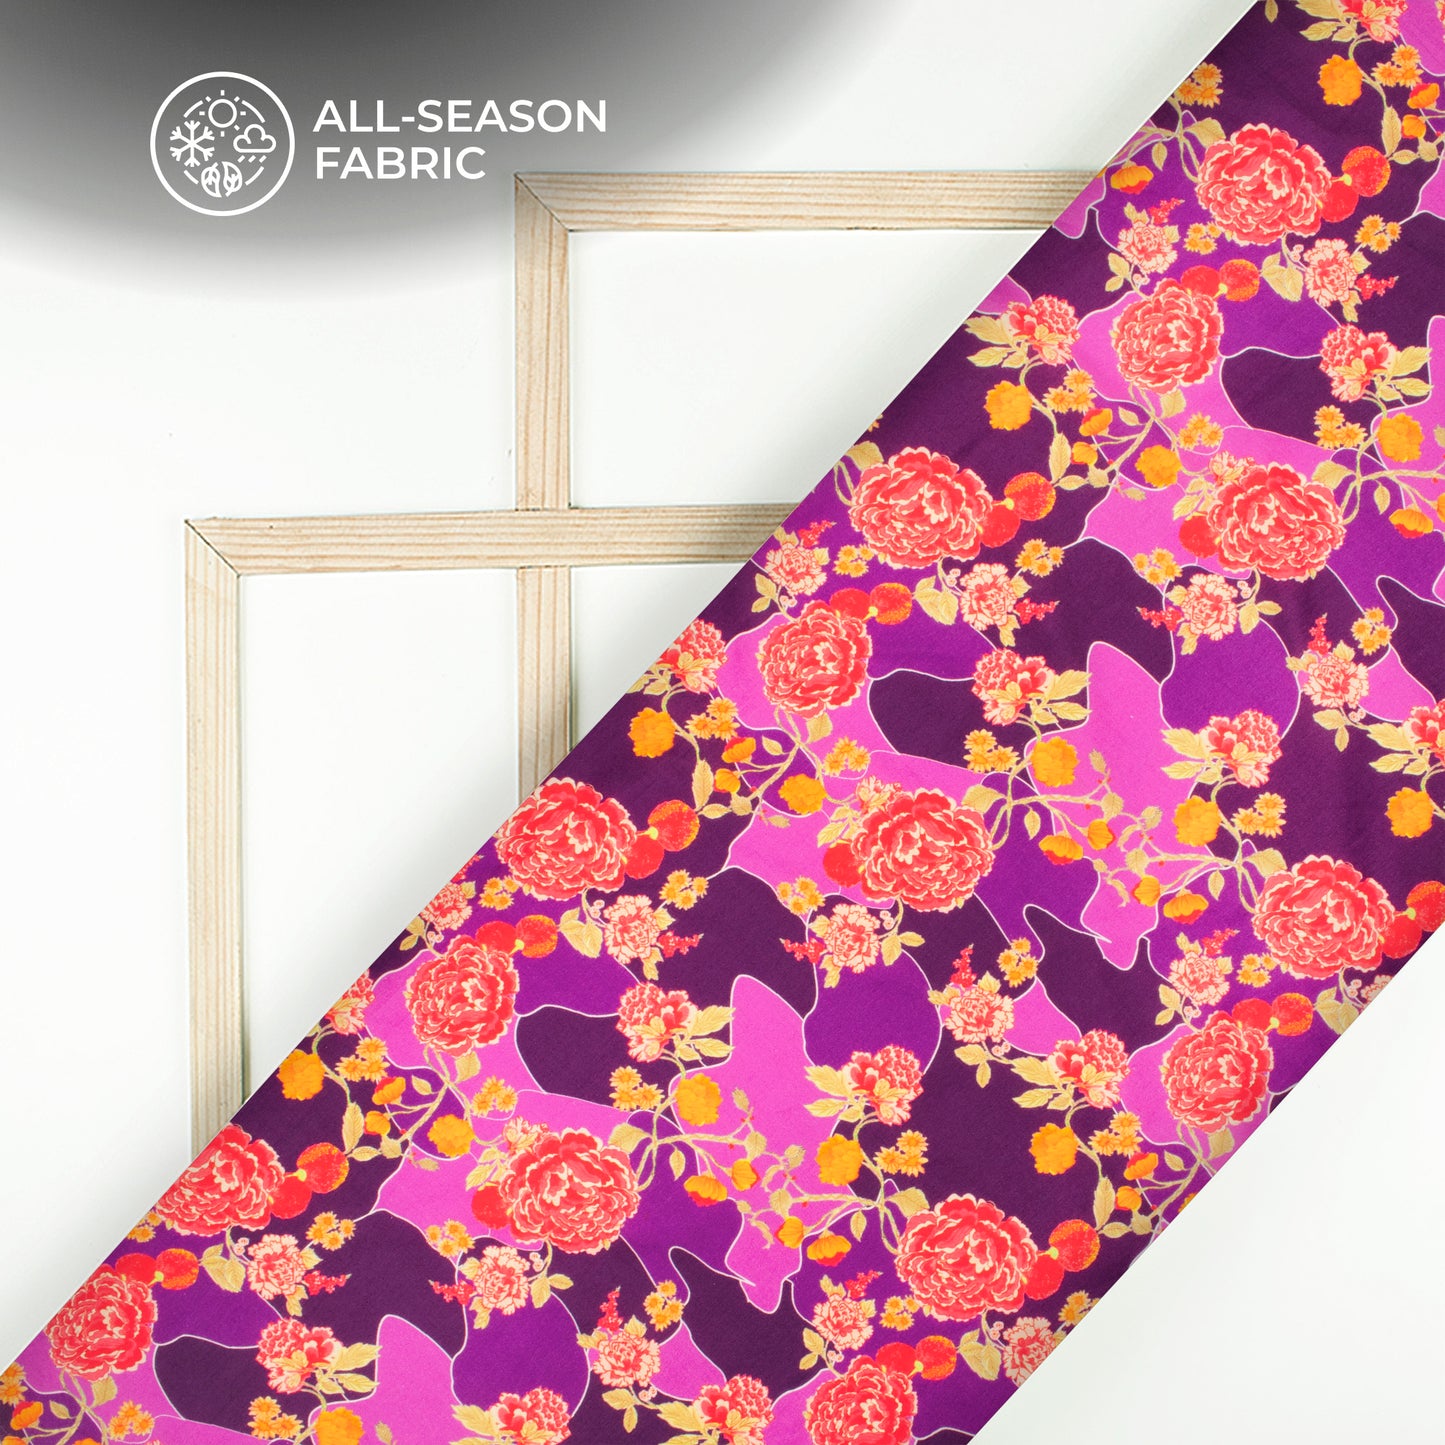 Springtime Splendor: Floral Digital Print Cotton Cambric Fabric